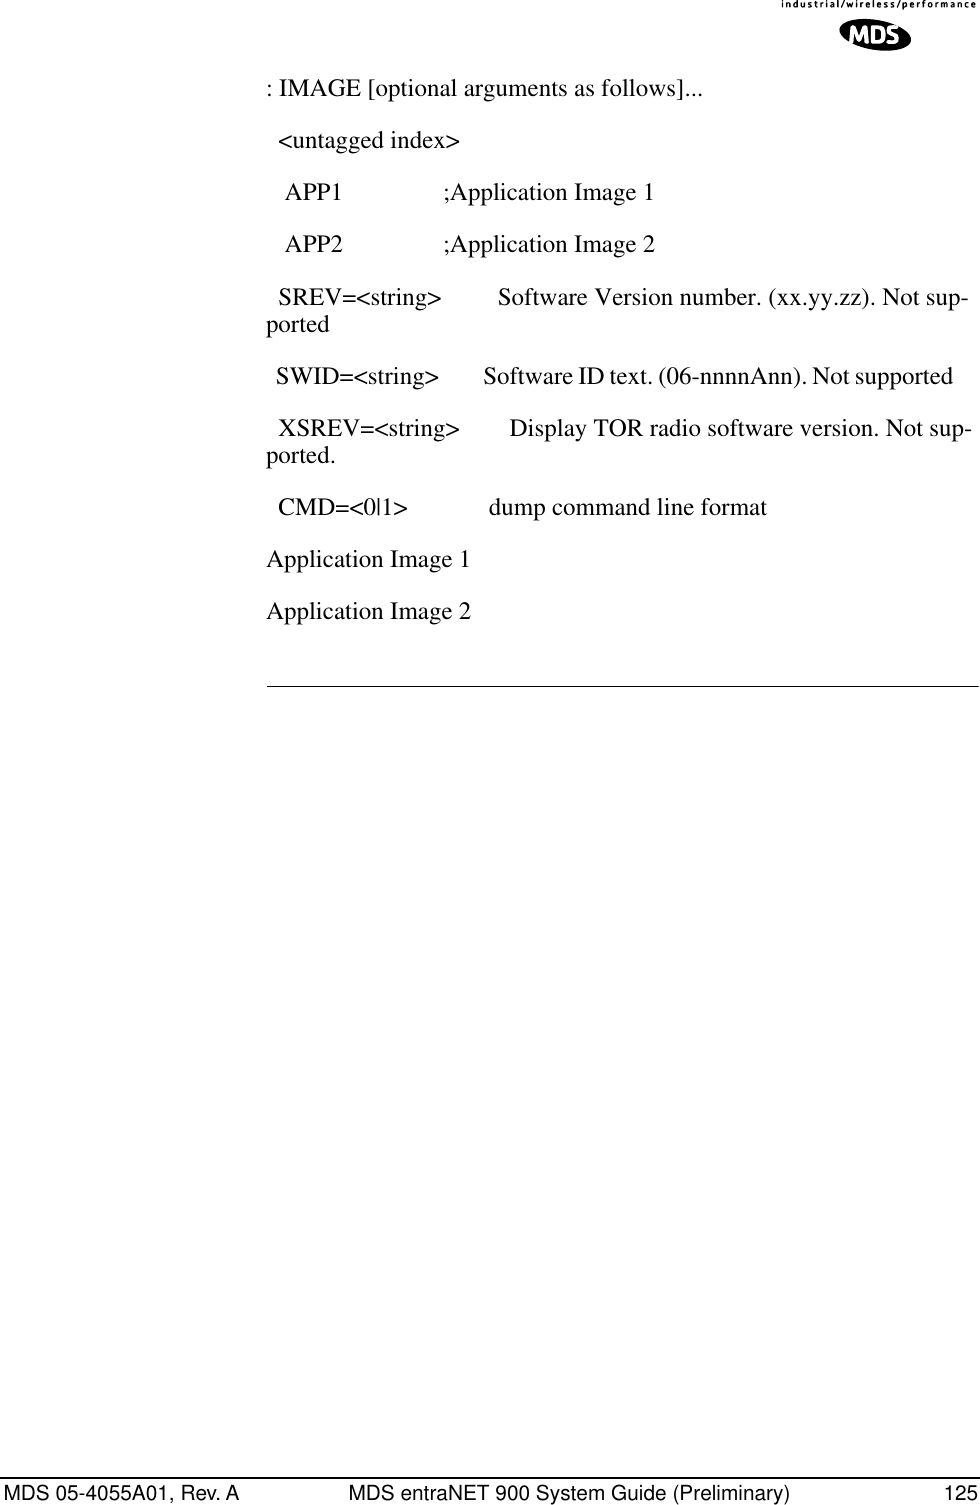 MDS 05-4055A01, Rev. A MDS entraNET 900 System Guide (Preliminary) 125: IMAGE [optional arguments as follows]...  &lt;untagged index&gt;    APP1                ;Application Image 1    APP2                ;Application Image 2   SREV=&lt;string&gt;         Software Version number. (xx.yy.zz). Not sup-ported  SWID=&lt;string&gt;         Software ID text. (06-nnnnAnn). Not supported       XSREV=&lt;string&gt;        Display TOR radio software version. Not sup-ported.  CMD=&lt;0|1&gt;             dump command line format Application Image 1 Application Image 2